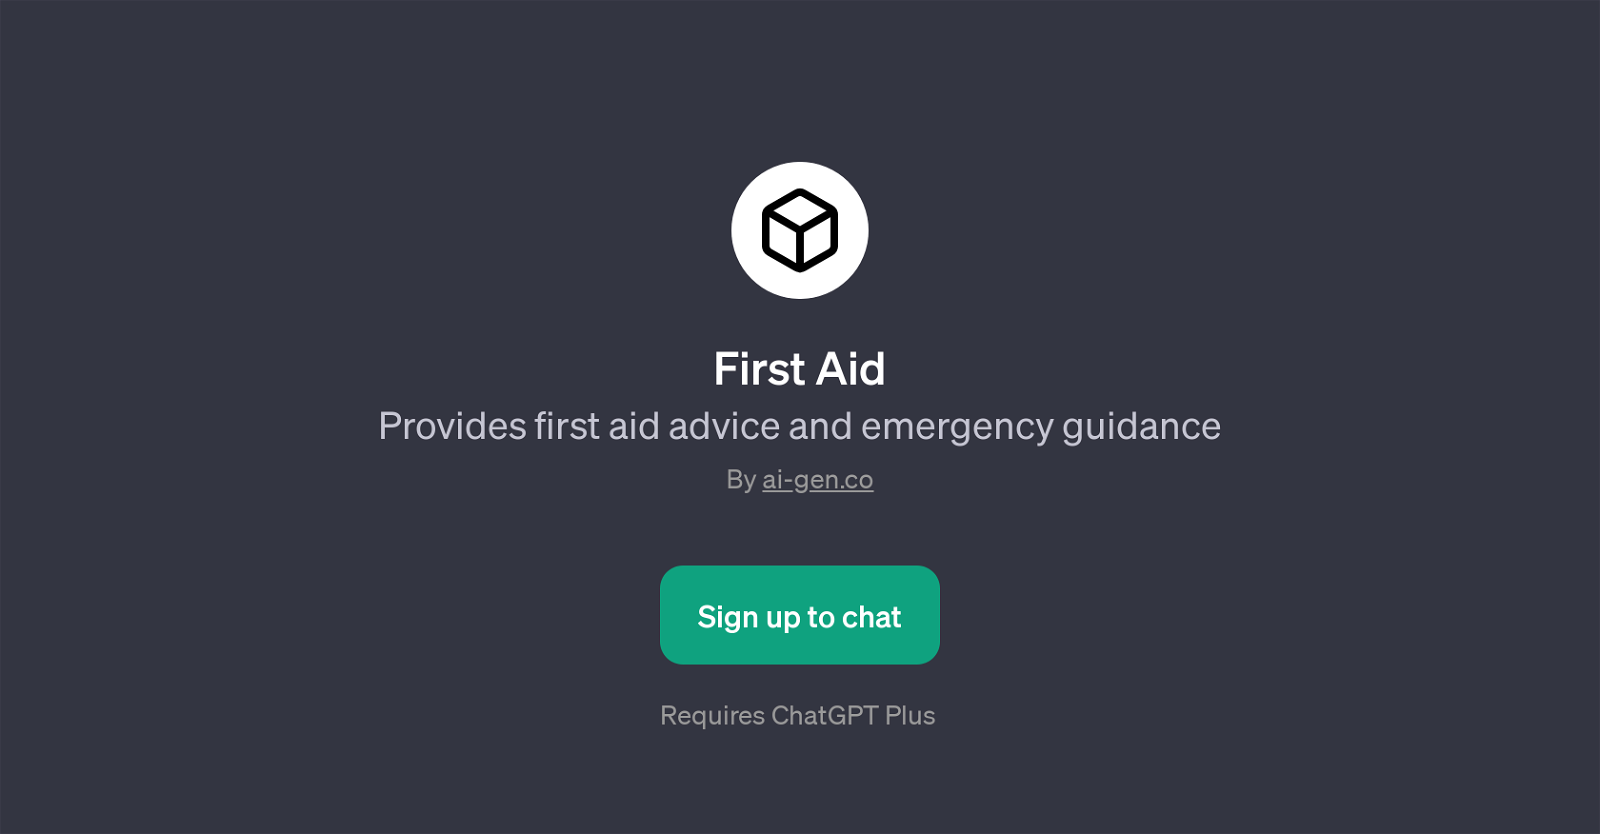 First Aid website